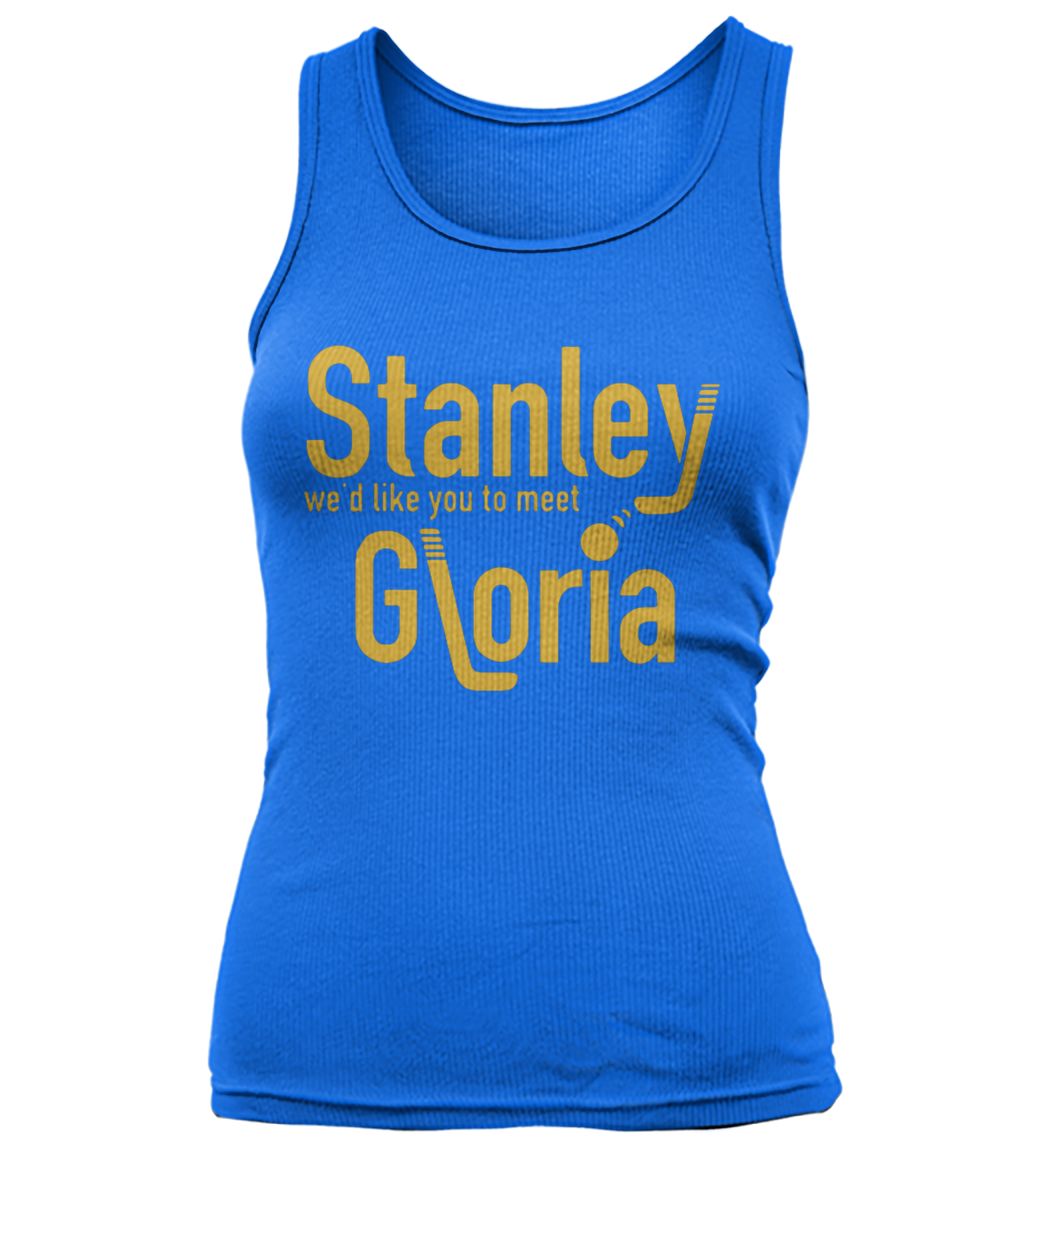 Stanley we'd like you to meet gloria women's tank top